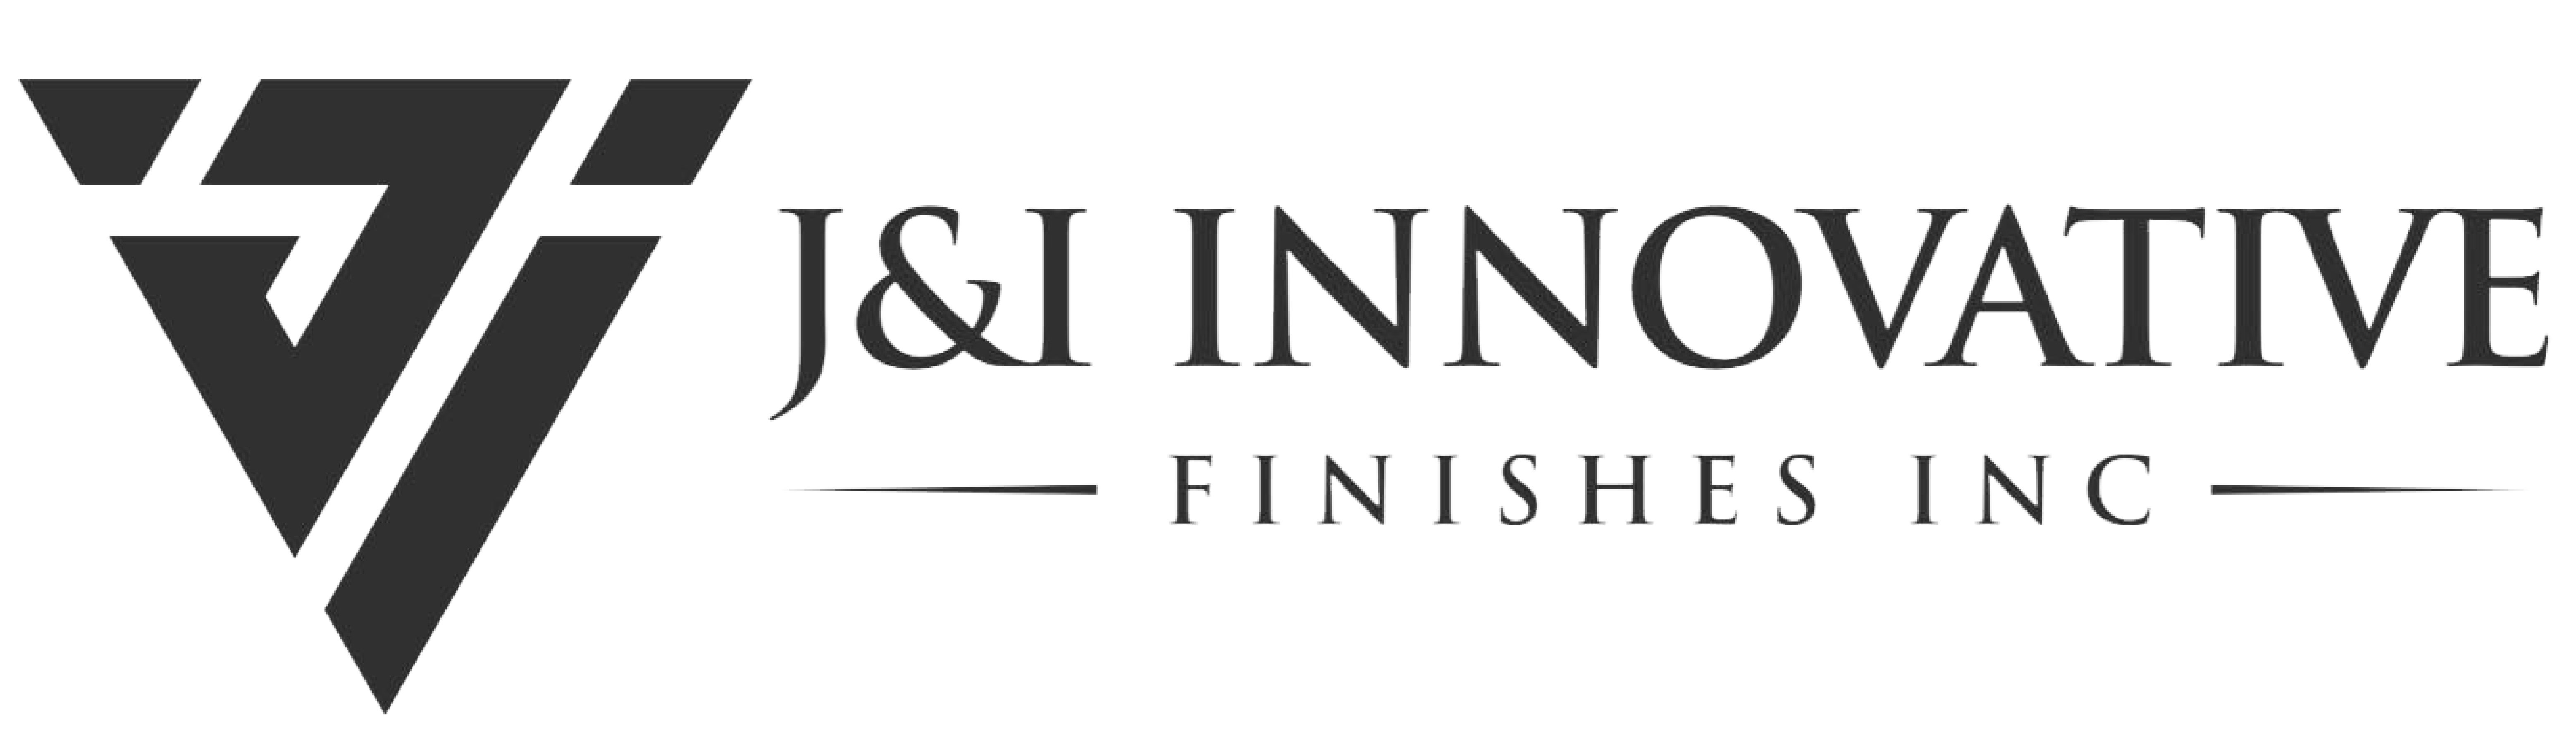 J&I Innovative Finishes Inc